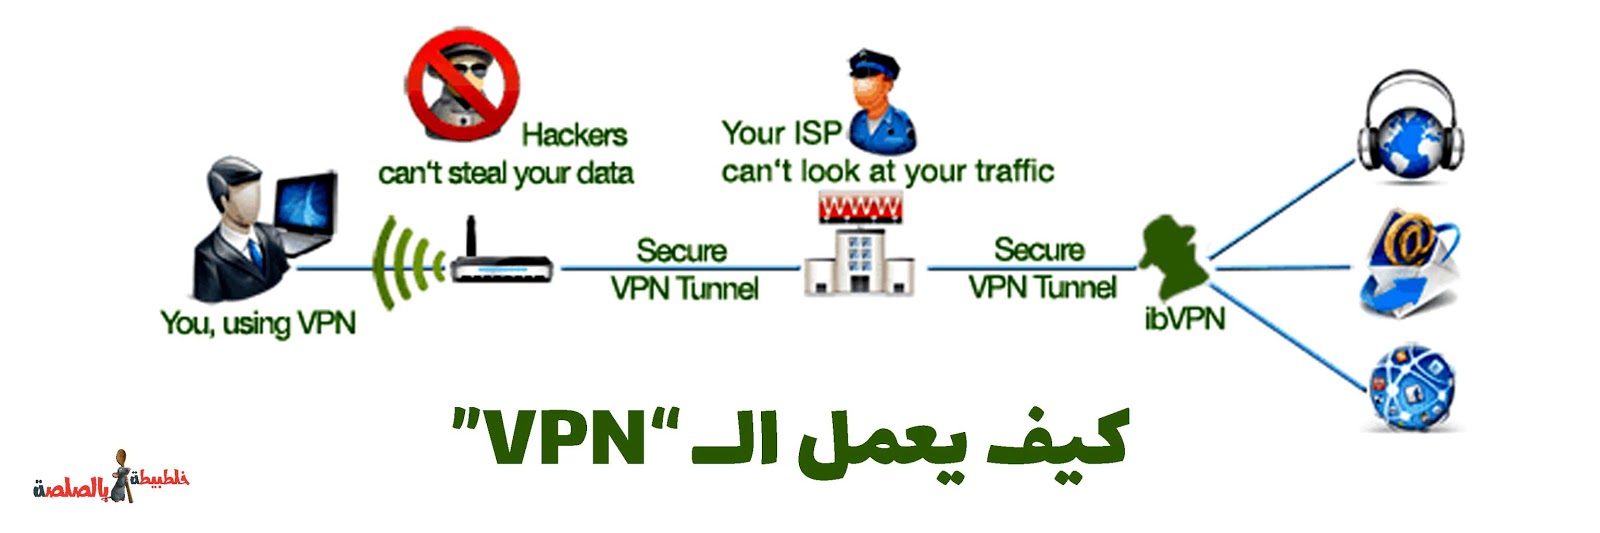 Трафик через vpn. ITOP VPN. VPN Bing. ITOP VPN Portable. Accoute Droid VPN.